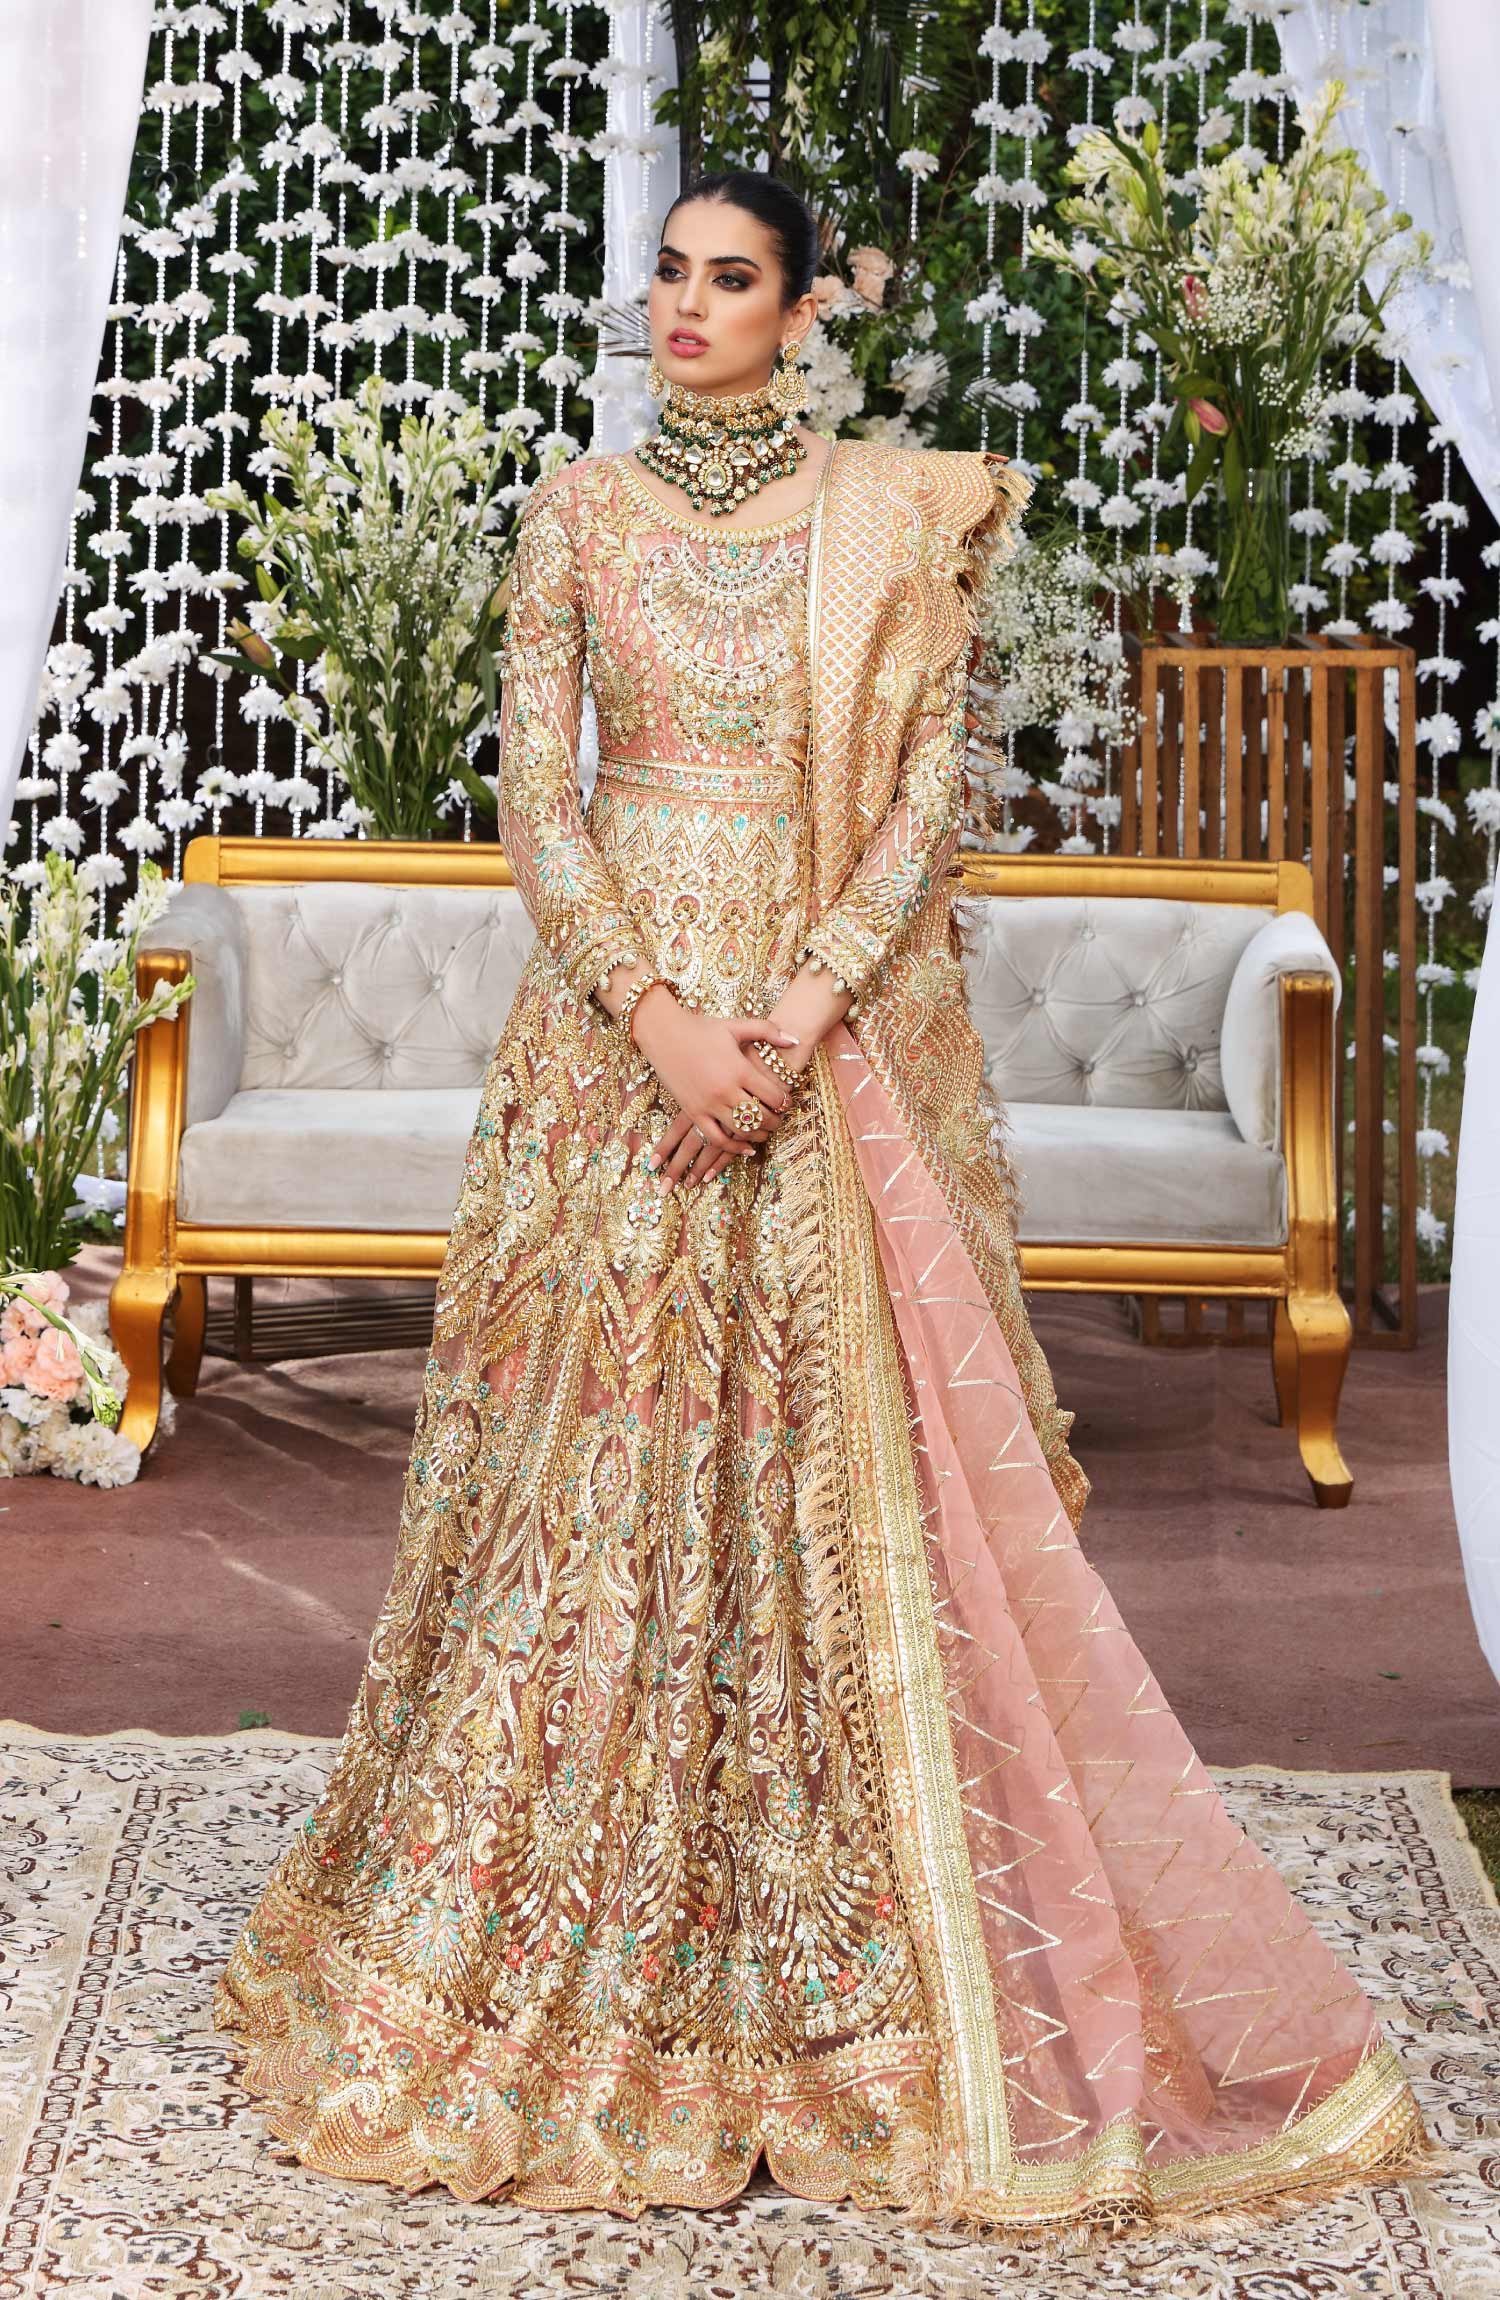 gown indian pakistani wedding party wear ethnic salwar kameez suit dress design. 